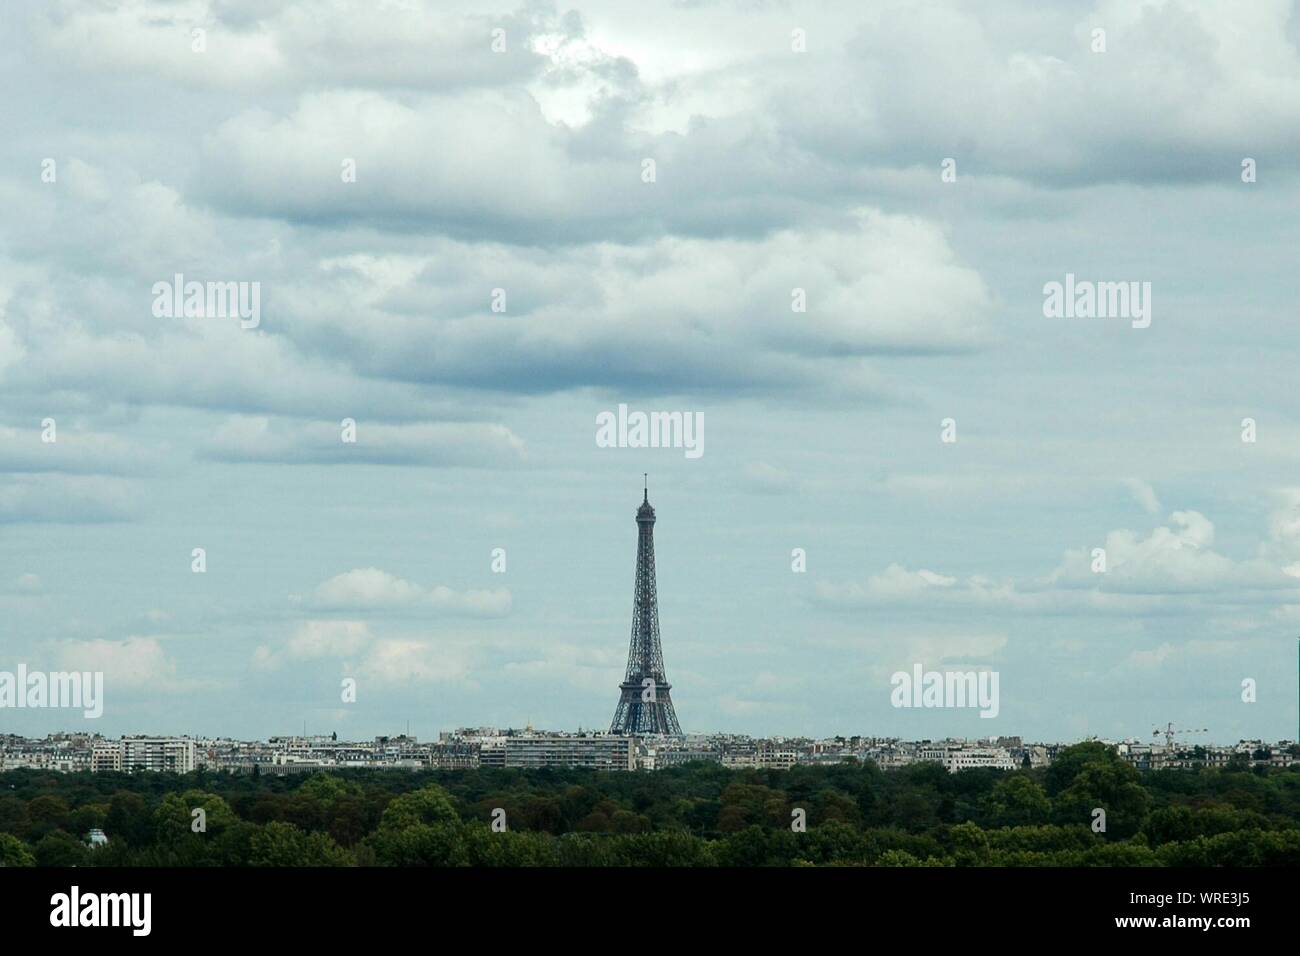 Eiffel Tower Dominating Paris Cityscape Stock Photo